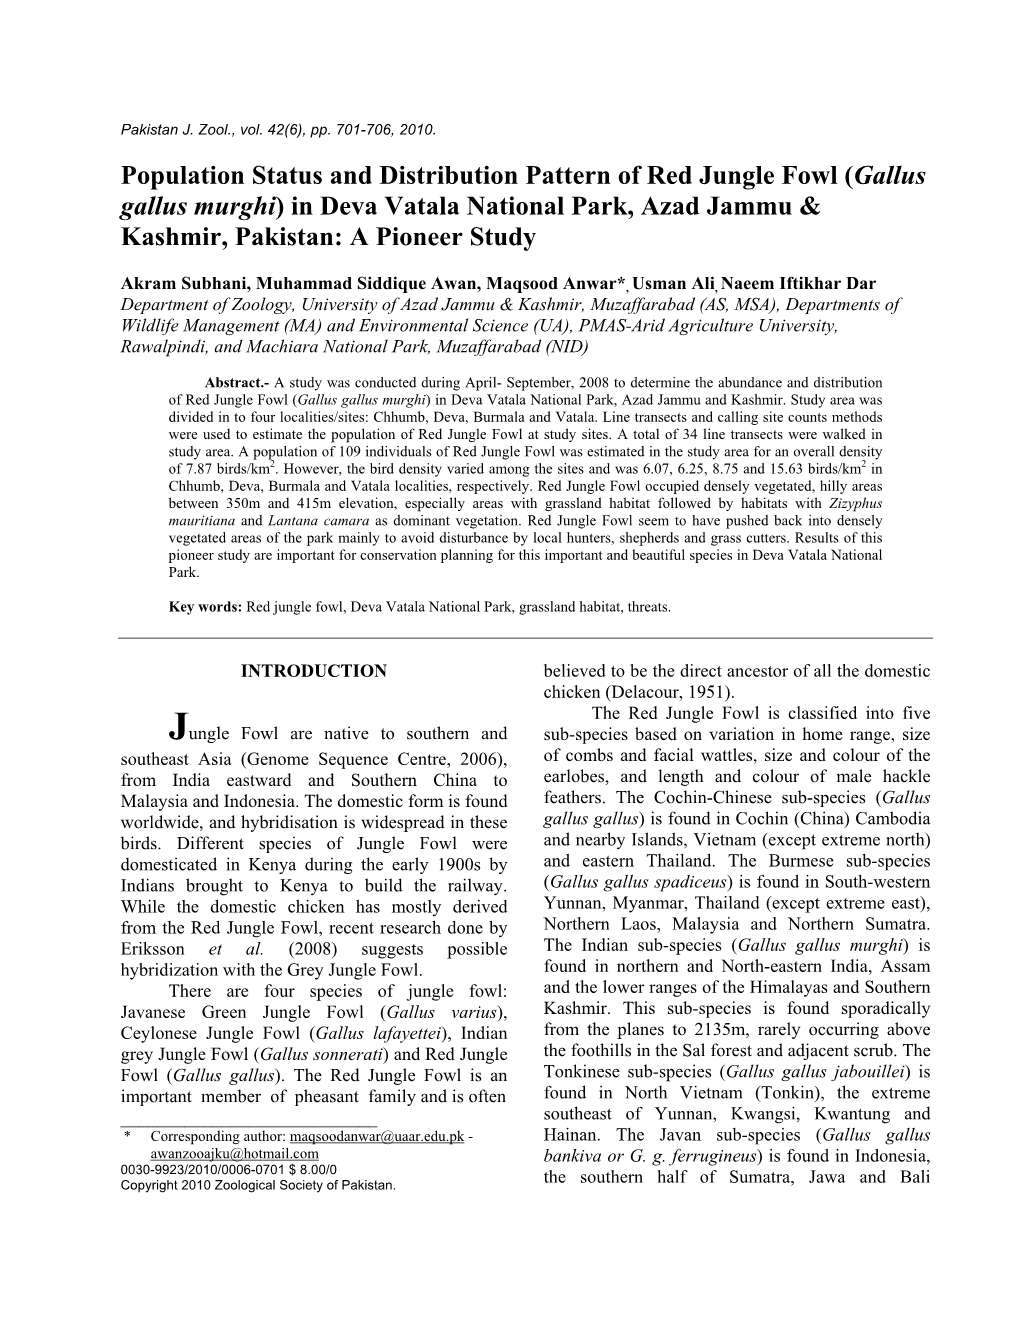 Population Status and Distribution Pattern of Red Jungle Fowl (Gallus Gallus Murghi) in Deva Vatala National Park, Azad Jammu & Kashmir, Pakistan: a Pioneer Study